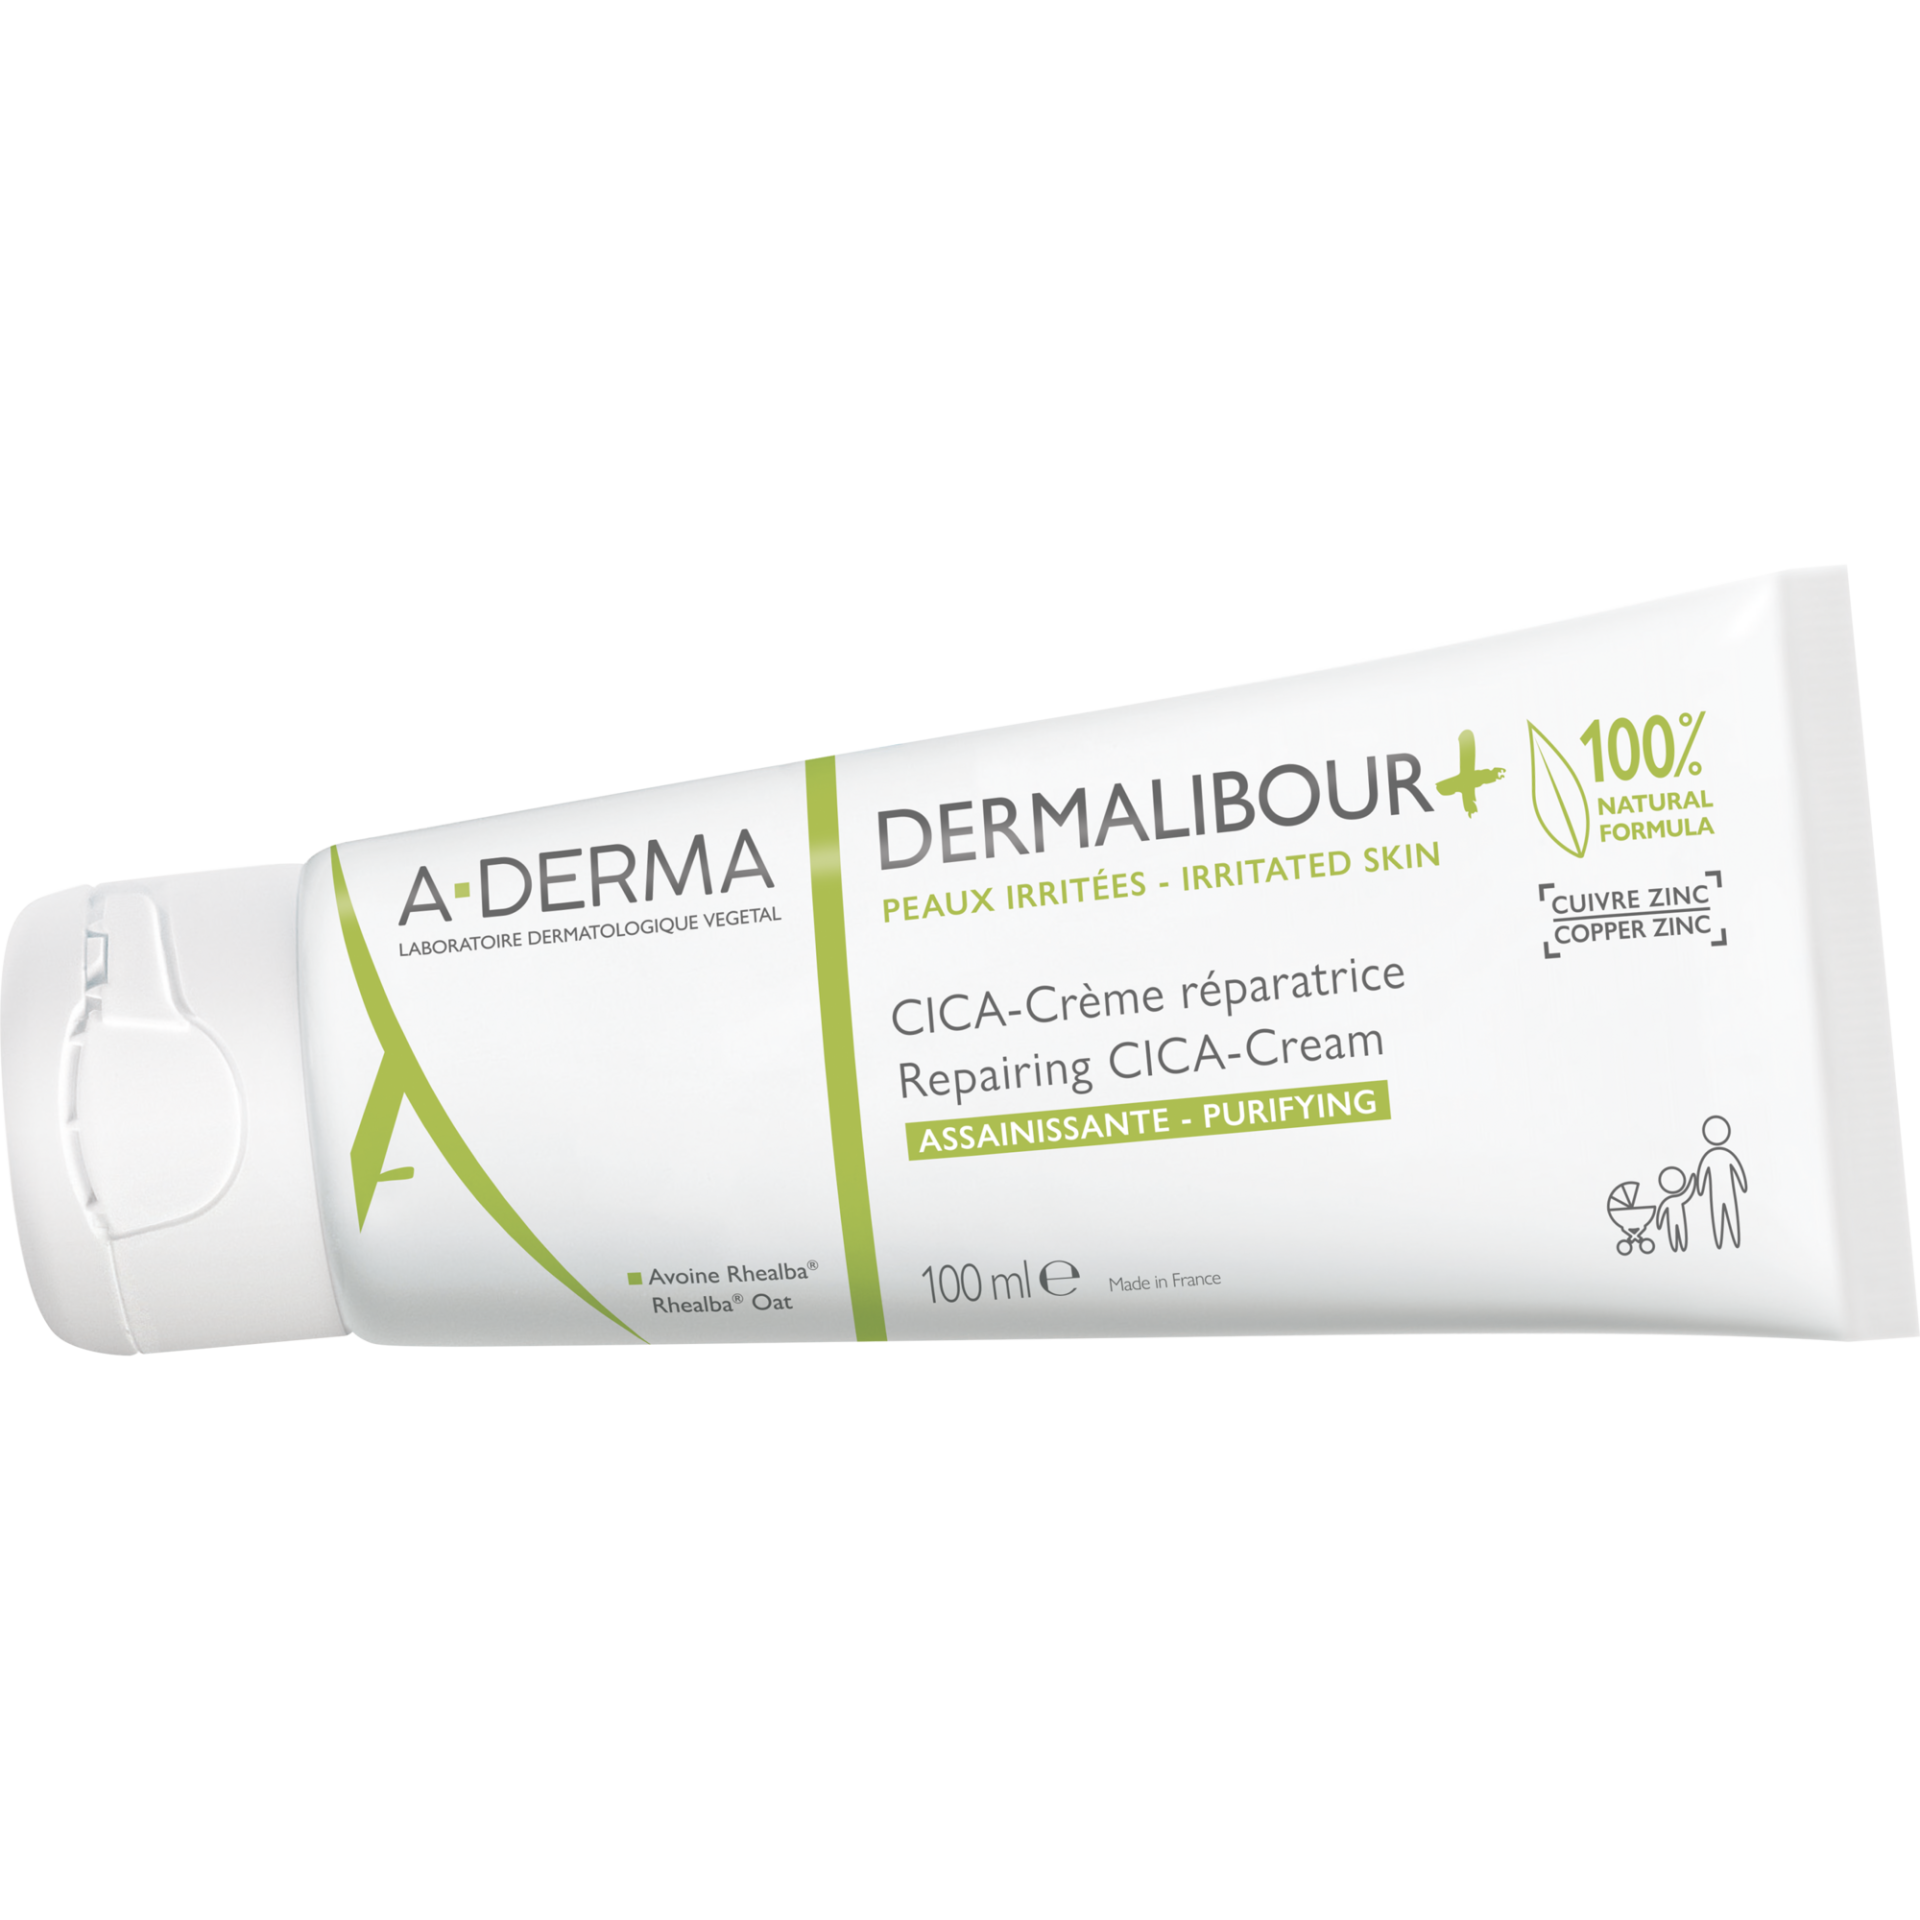 A-Derma Dermalibour+ obnavljajoča CICA-krema, 100 ml